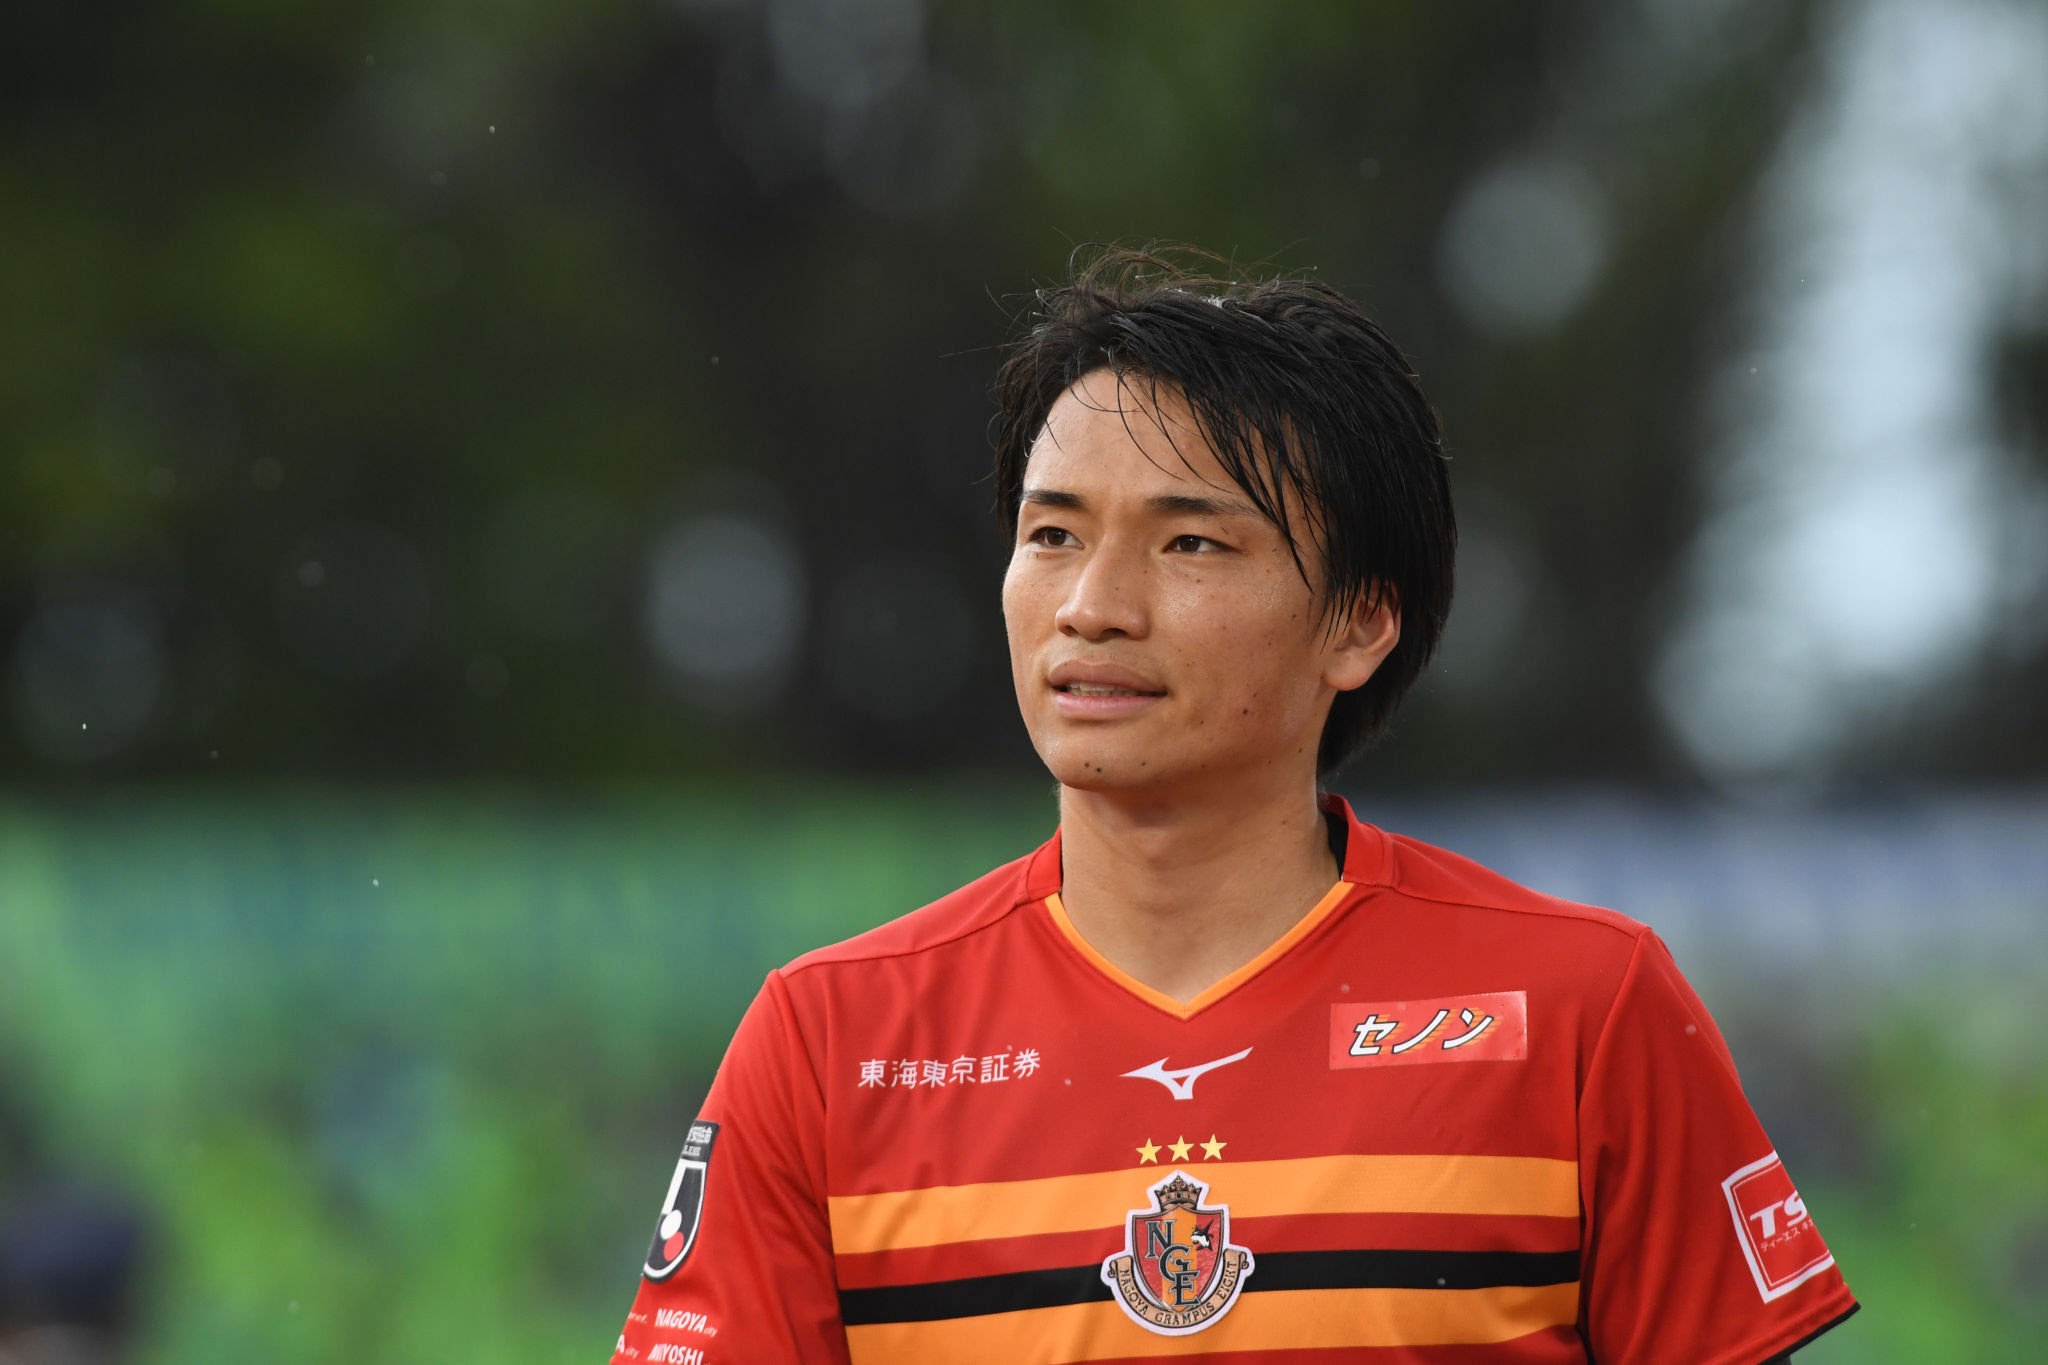 Shinnosuke Nakatani (中谷 進之介) age, position, salary, team, girlfriend, facts, football Career